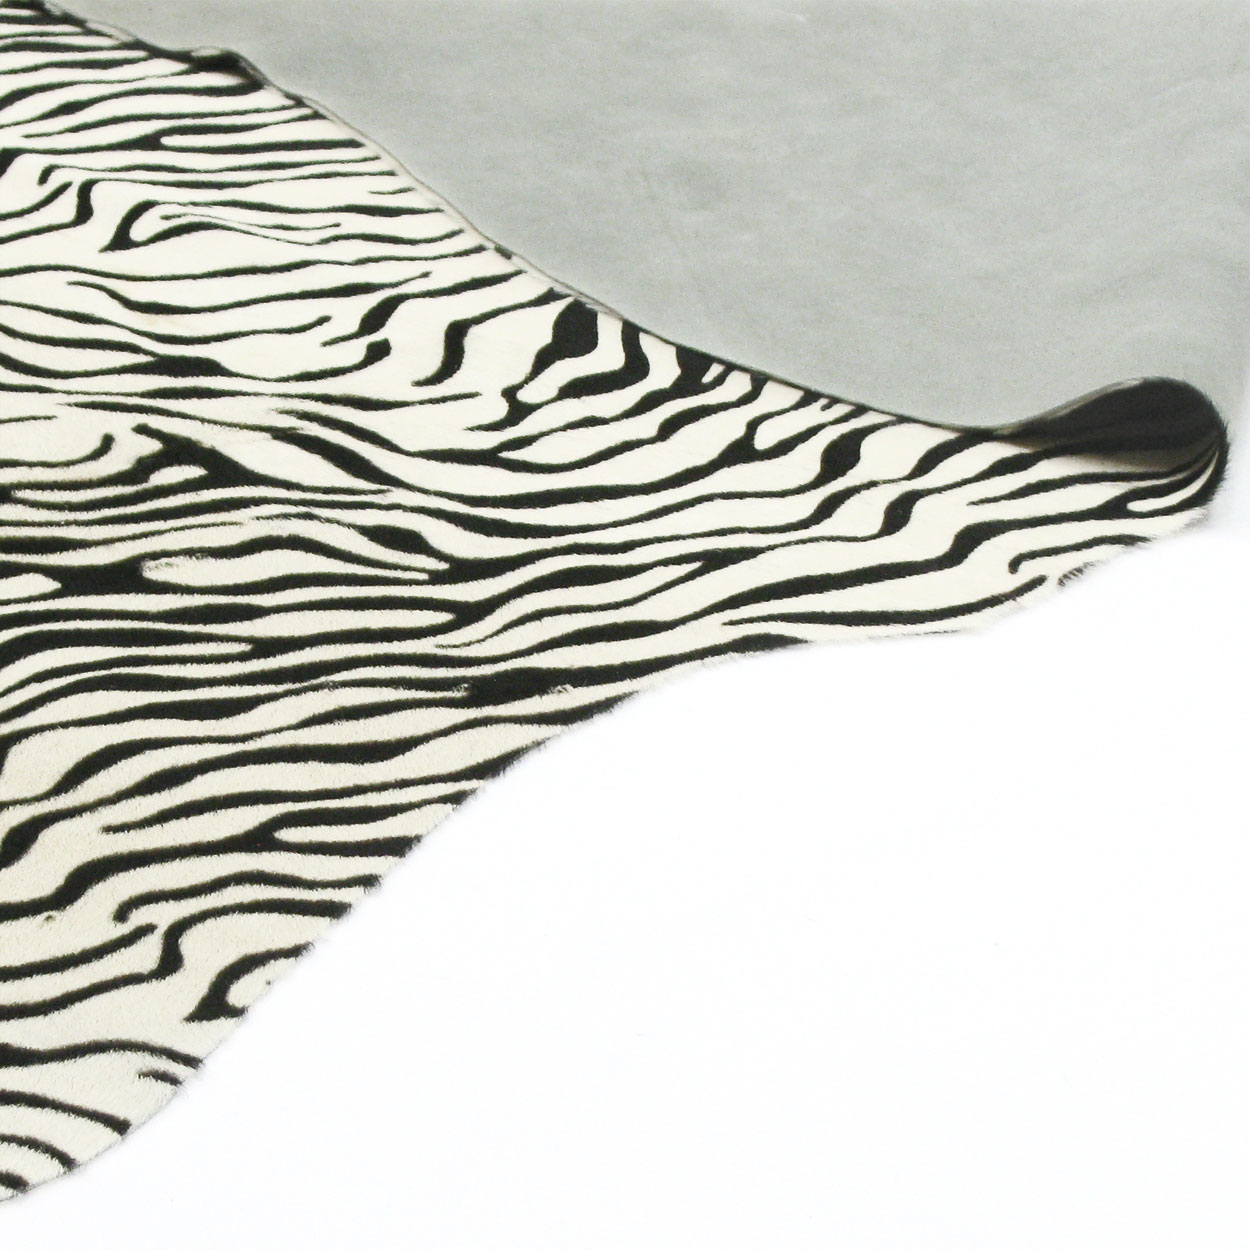 322305 - Safari Stenciled Baby Zebra Print on Beige Premium Cowhide